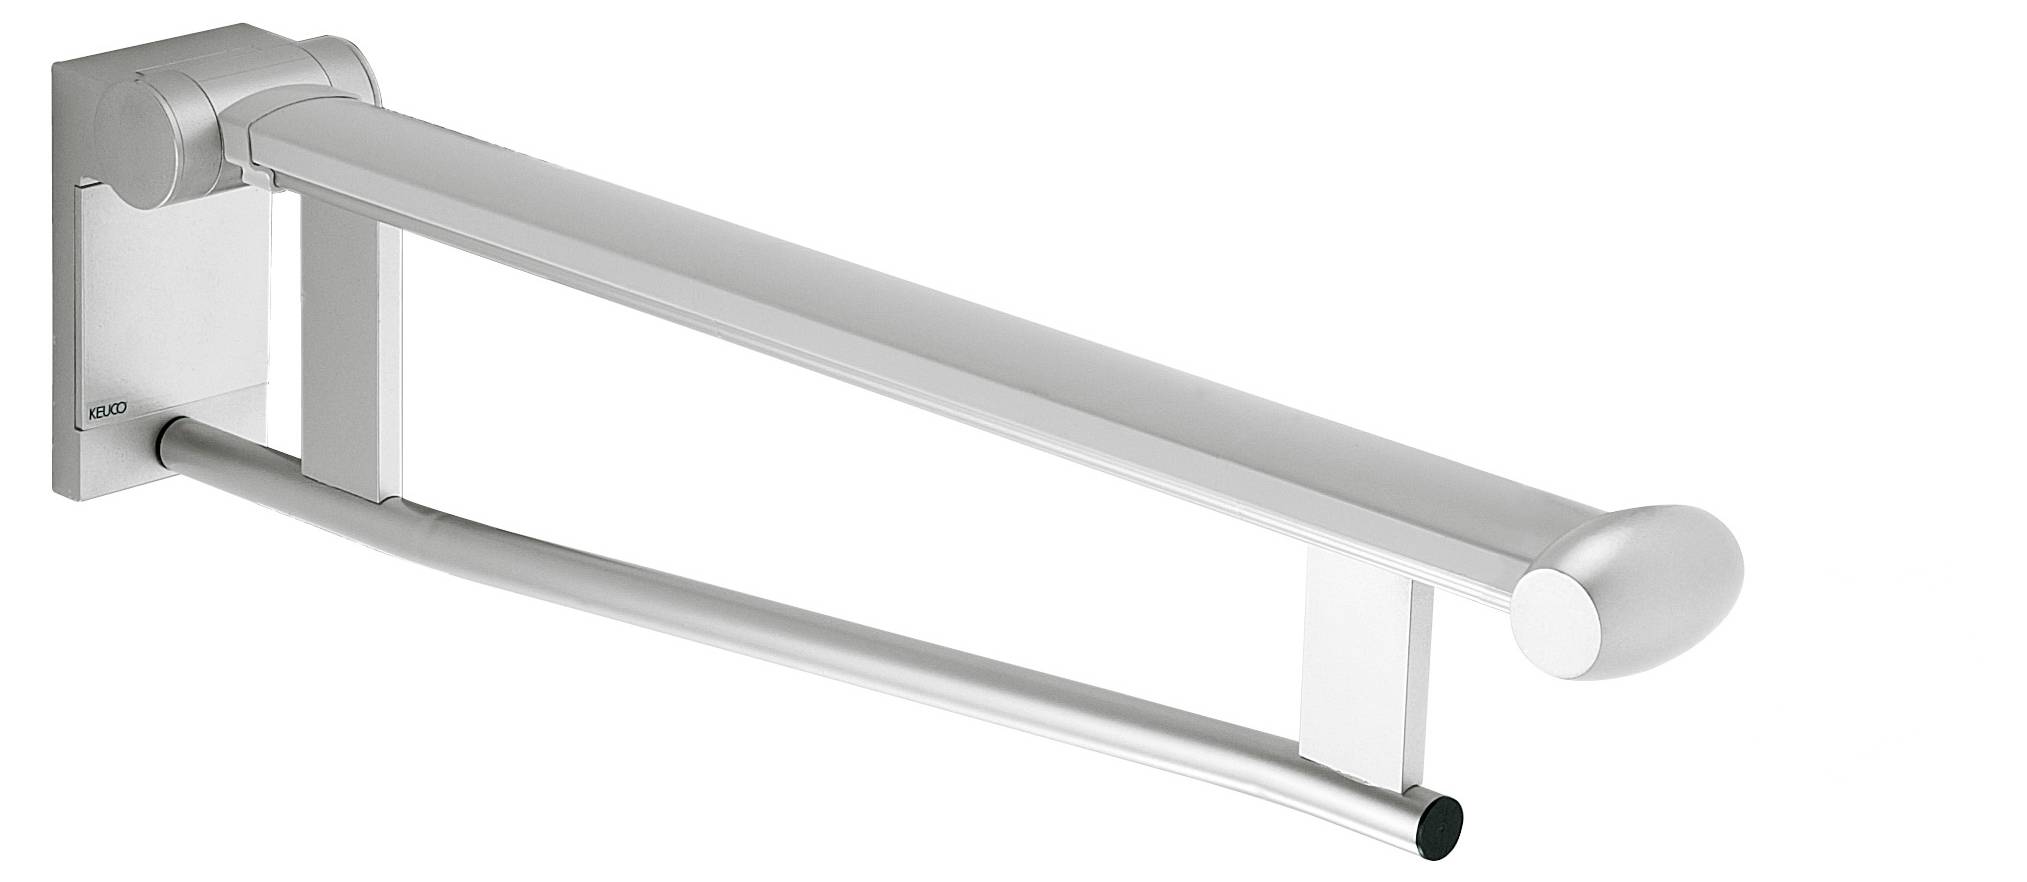 Hinged Support Rail - 650mm - Grab Bar - PLAN CARE - Grab bar